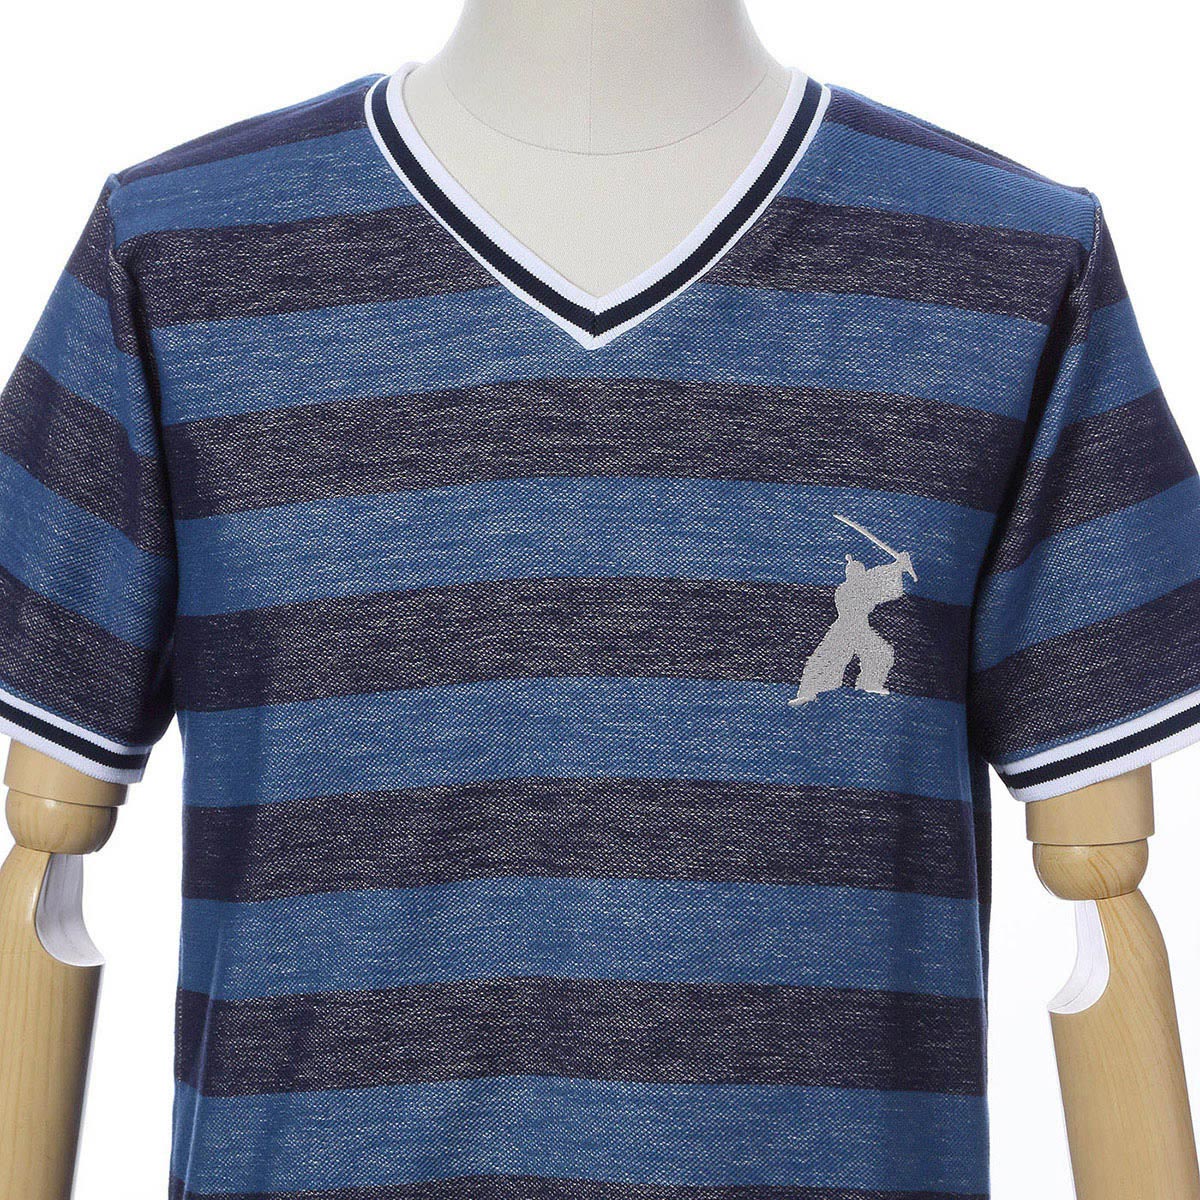 Men’s Short Sleeve Cotton Fashion V-neck T-shirt -16. Samurai Striped Design Blue Made in Japan FORTUNA Tokyo